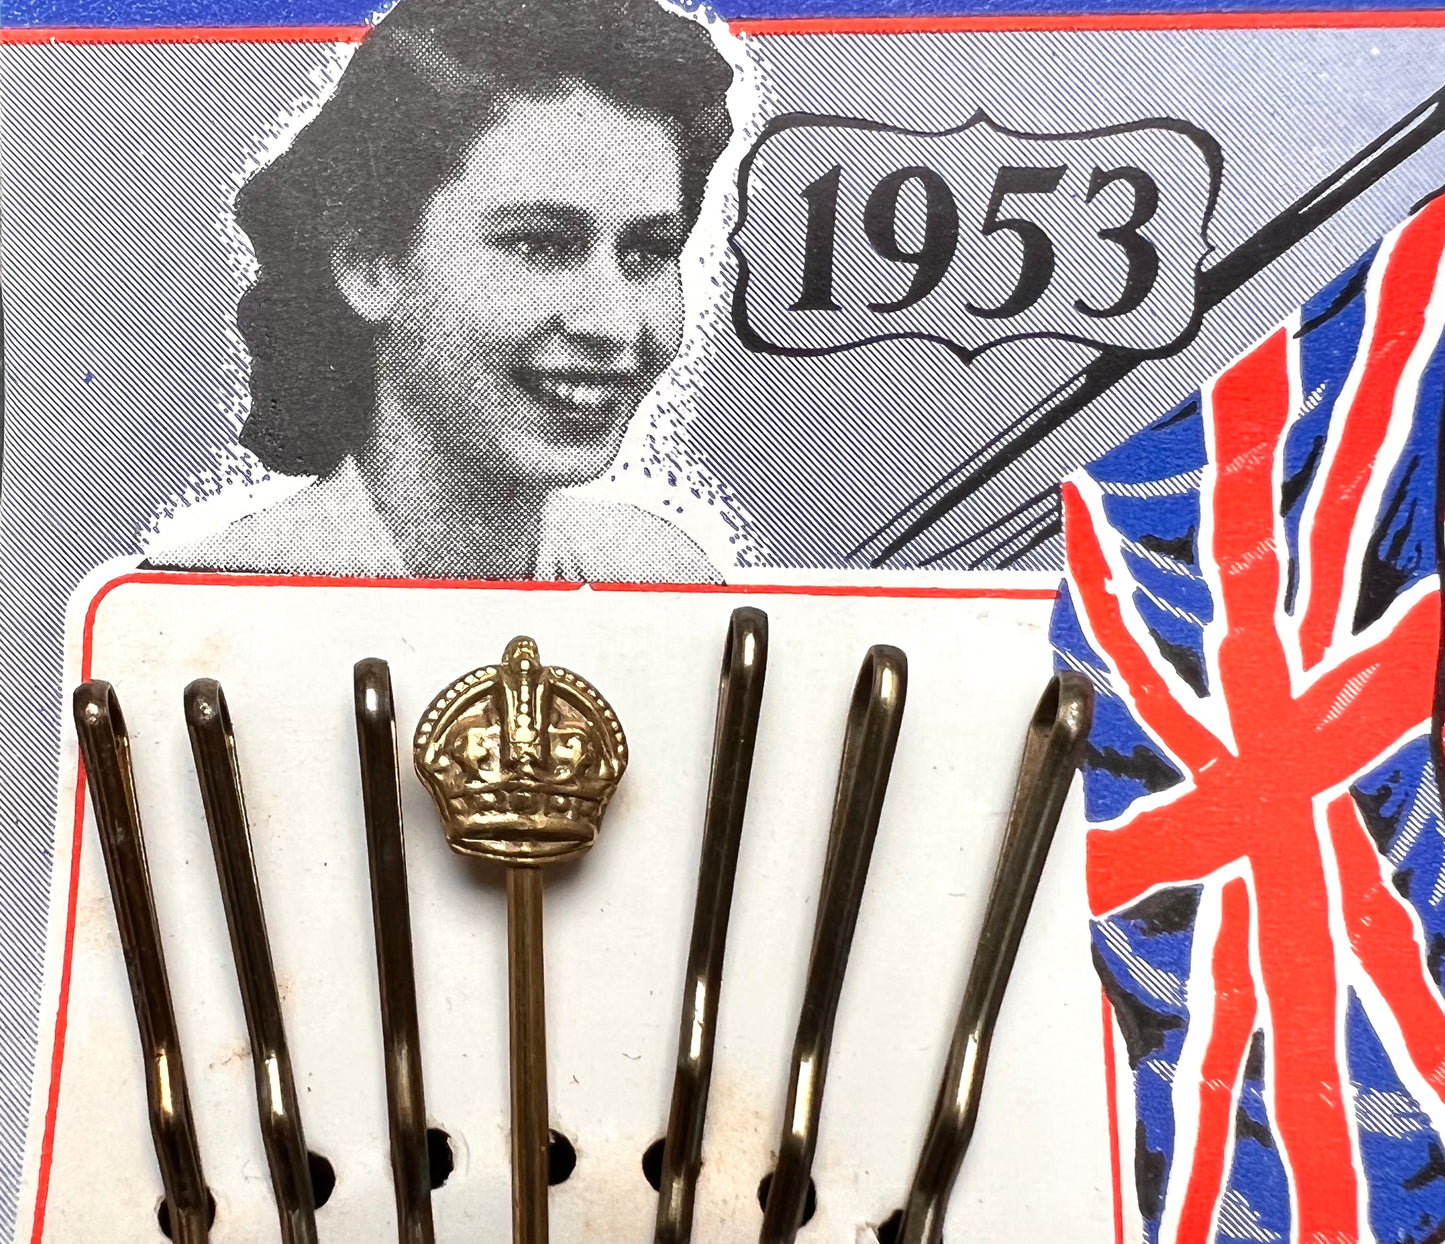 Original Unused 1953 Queen Elizabeth CORONATION Hair Pins with CROWN